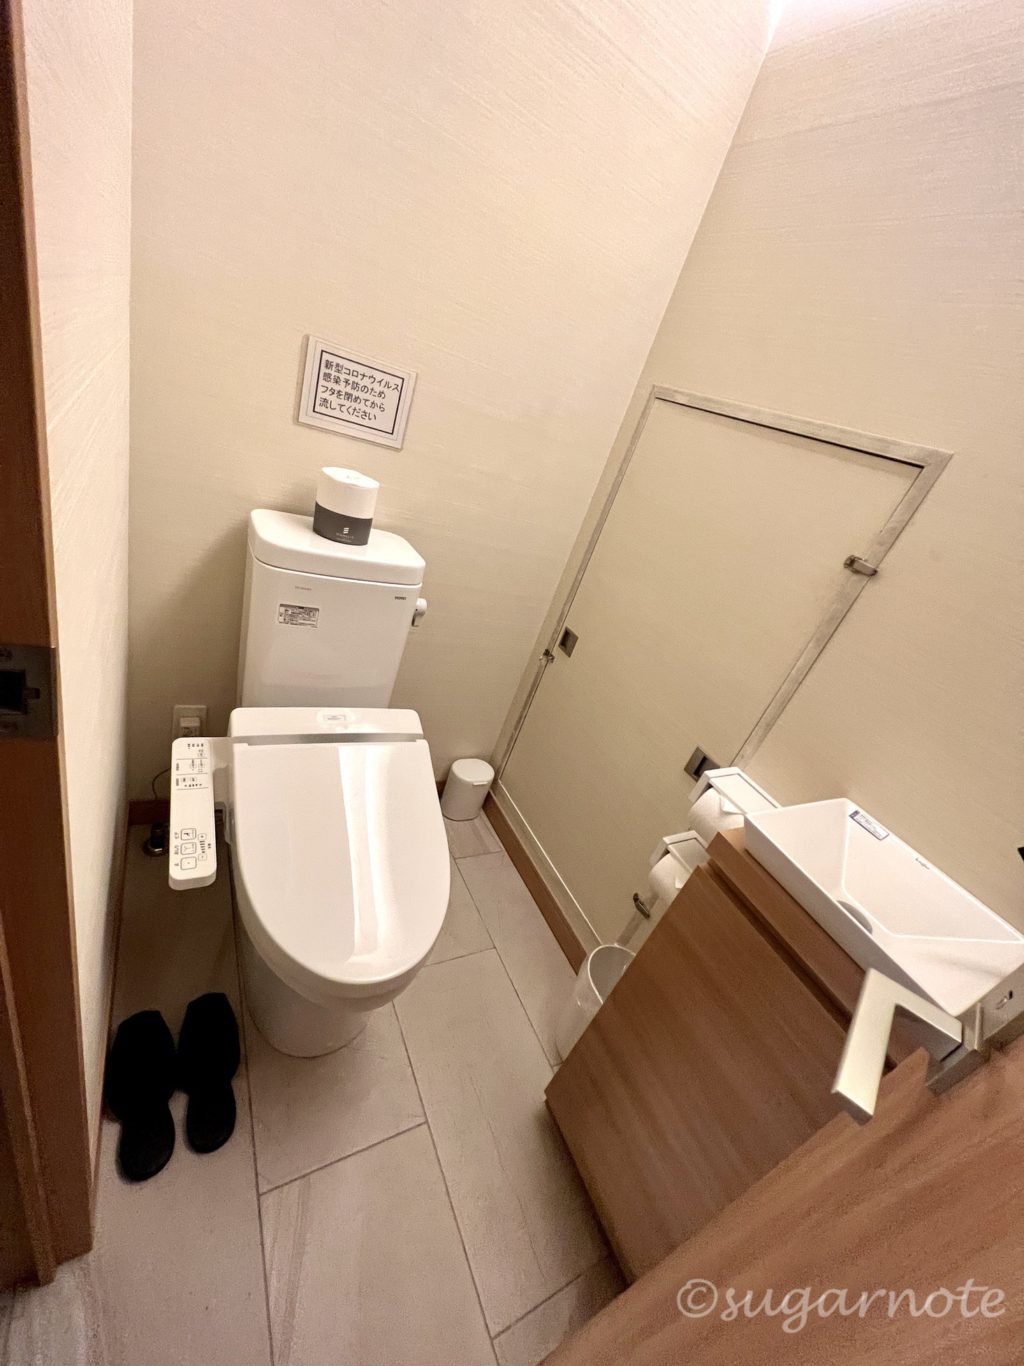 Unzen Kyushu Hotel Toilet